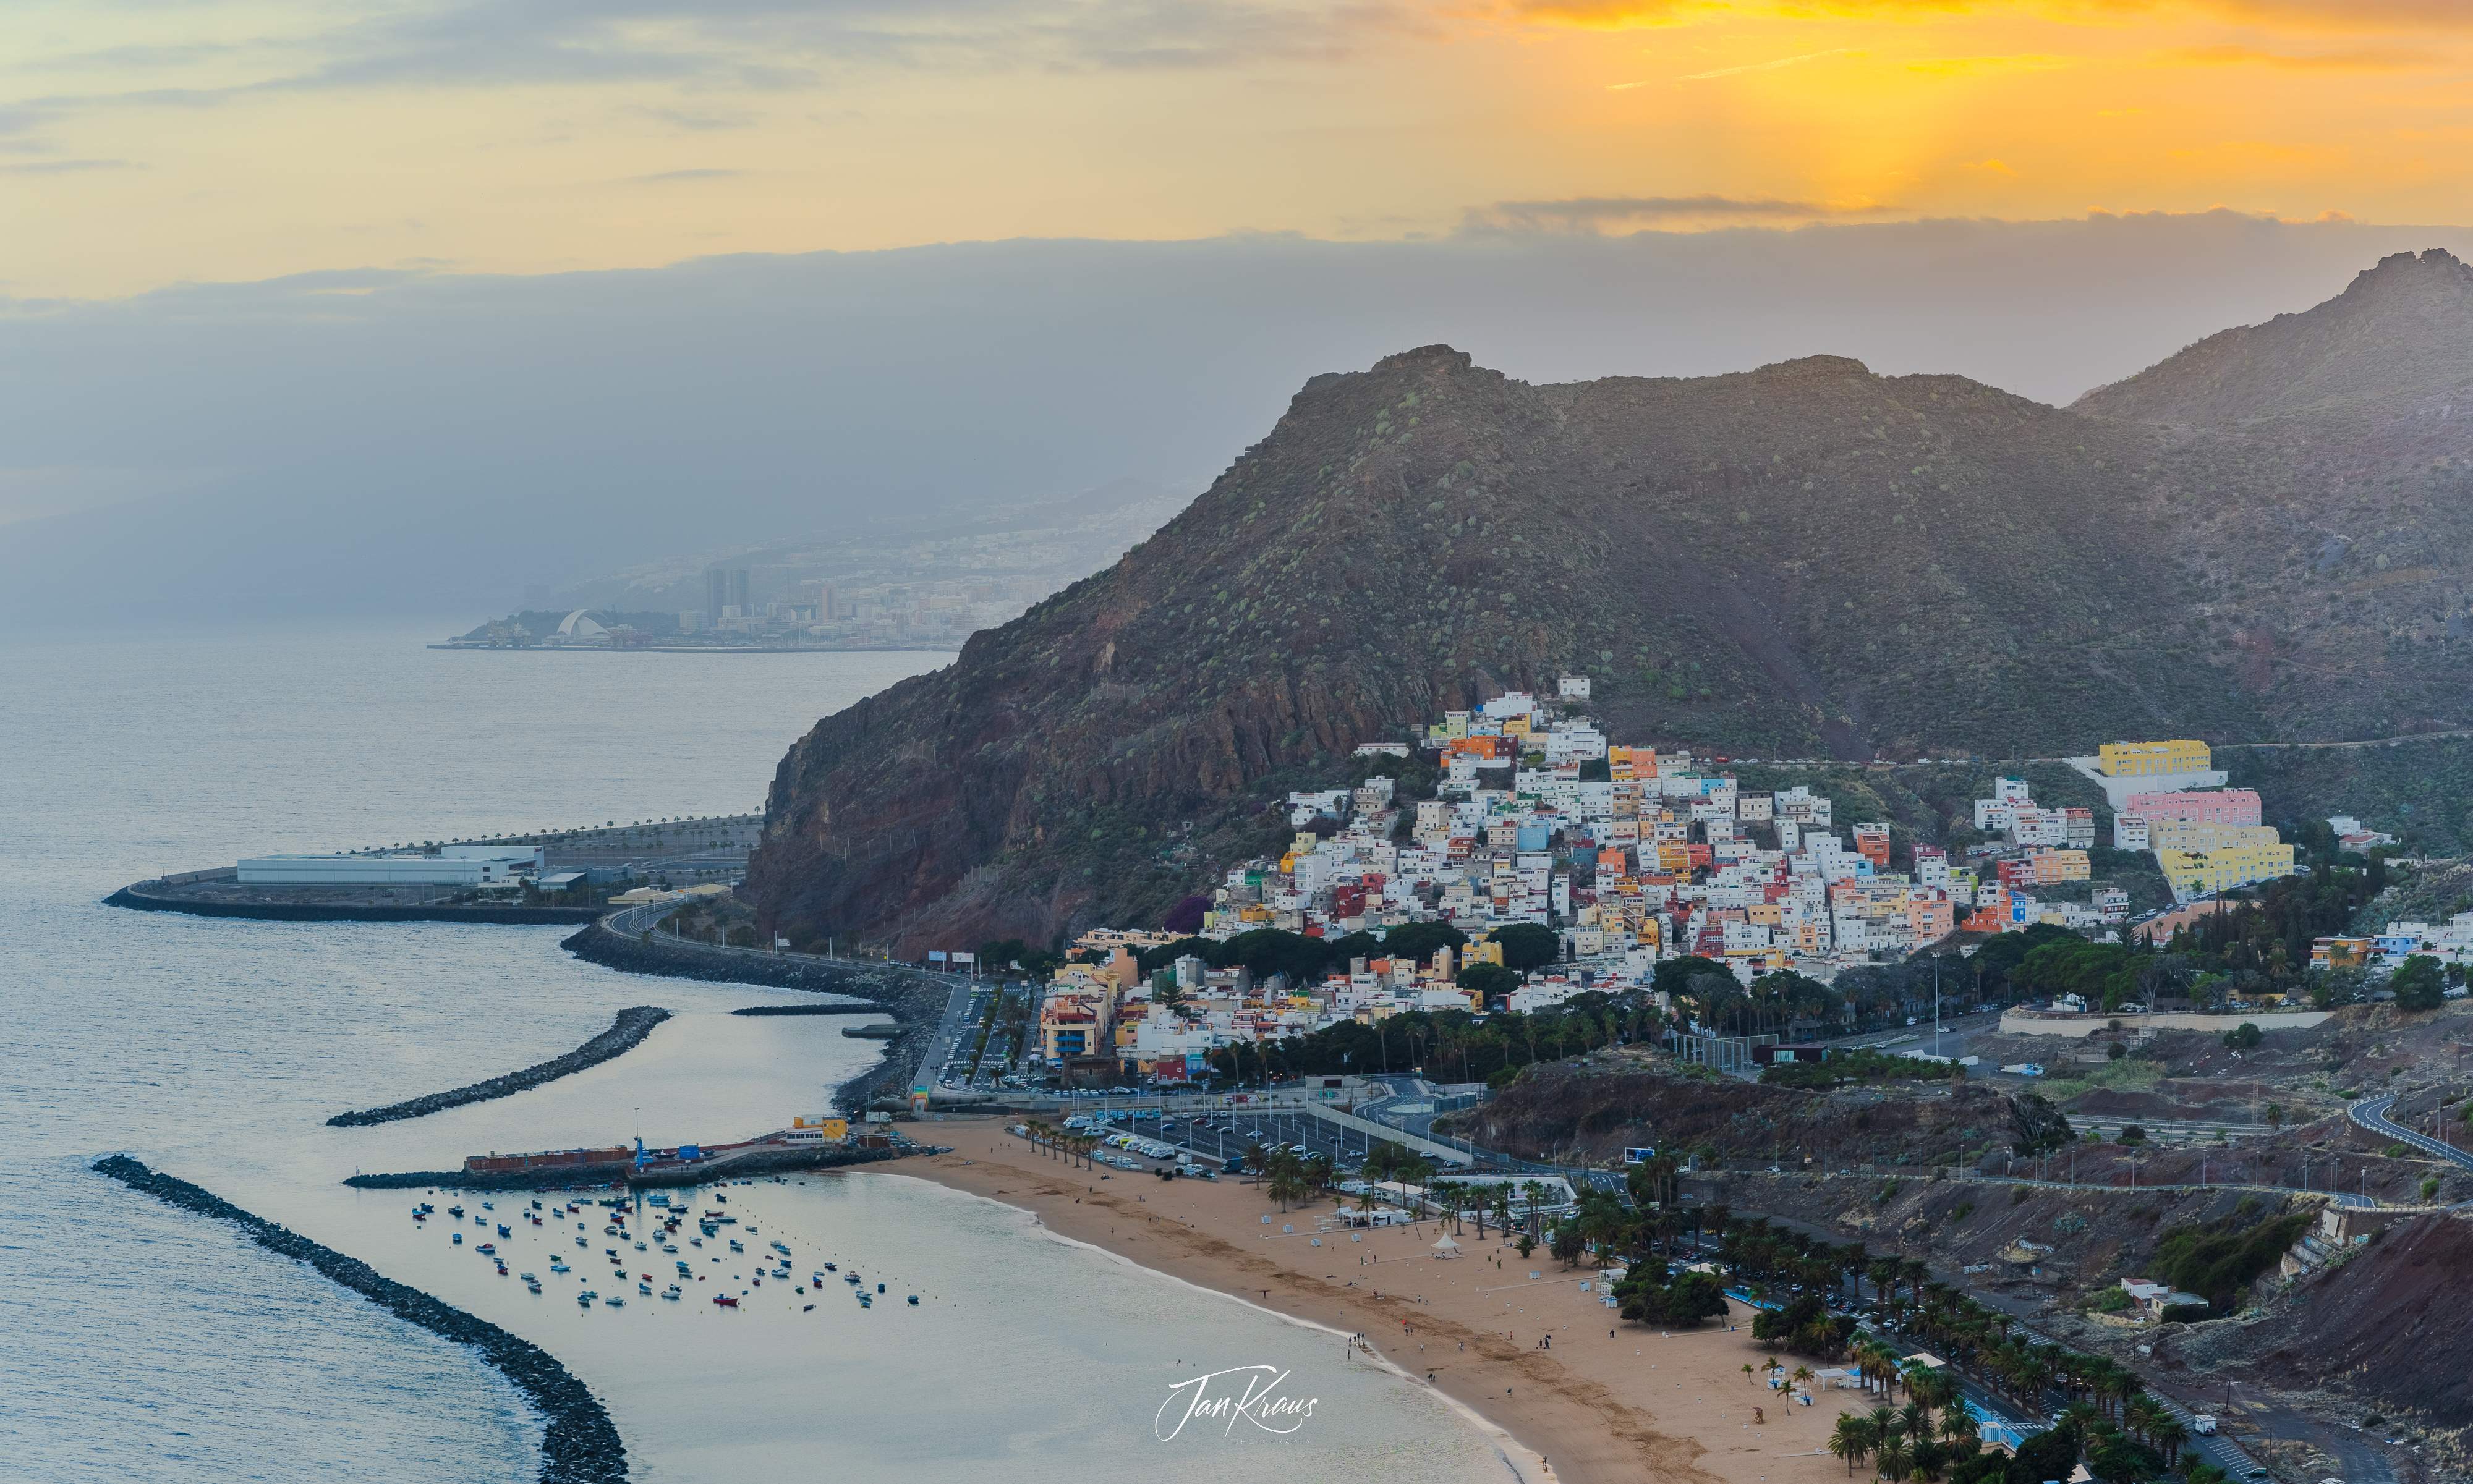 A view of San Andres from the Mirador Playa de las Teresitas, Tenerife,  Canary Islands, Spain